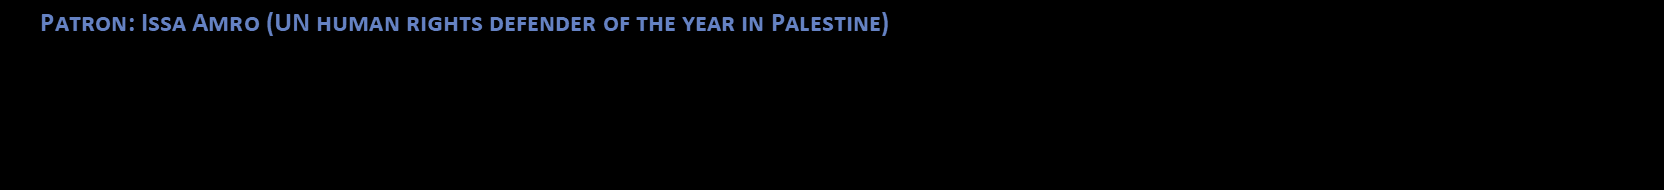 One Democratic Palestine